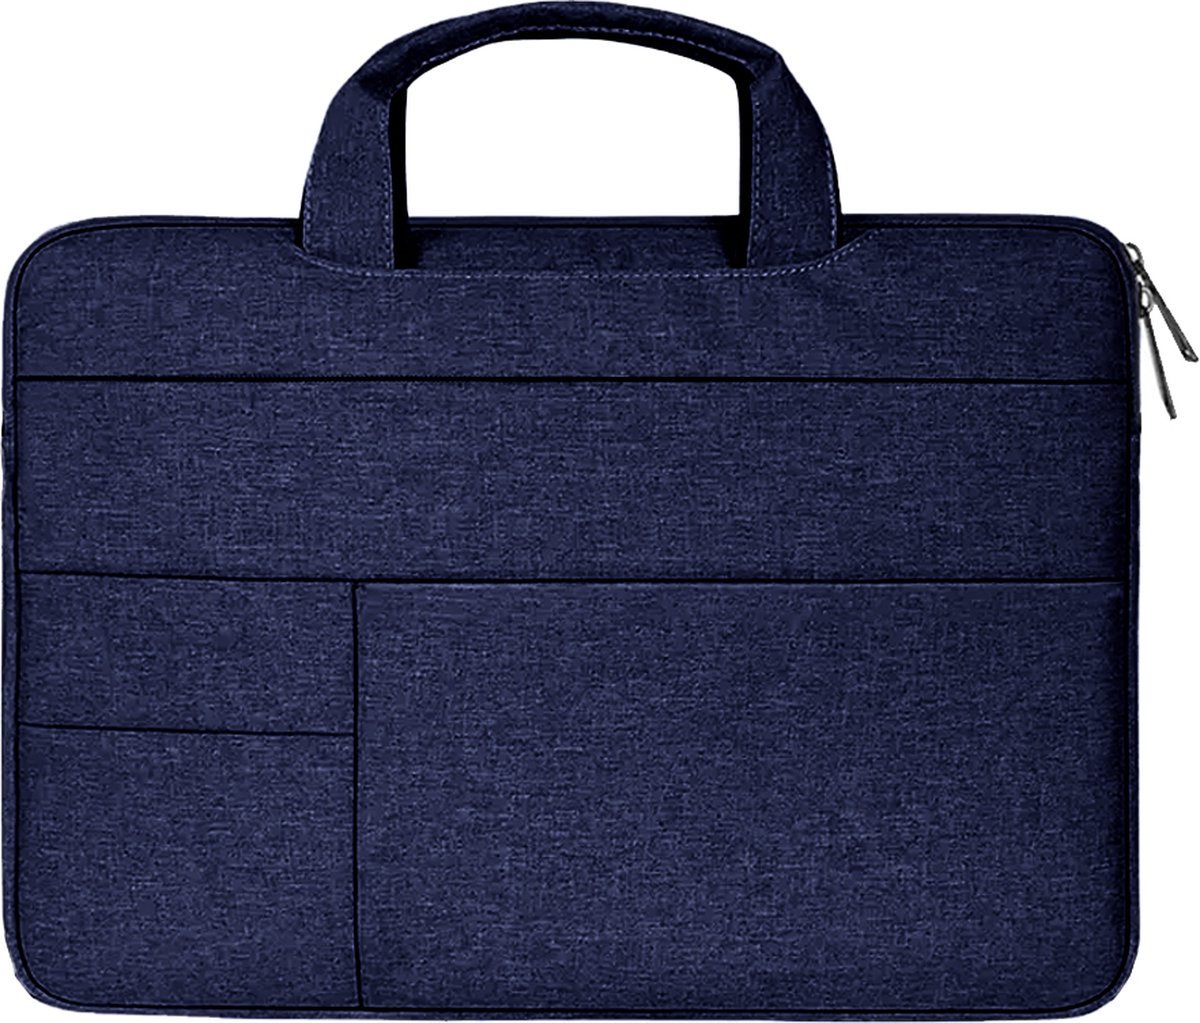 Case2go - Laptophoes geschikt voor Medion Akoya - Laptoptas 13 inch / 13.3 inch - Spatwaterdicht - Met Handvat - Donker Blauw